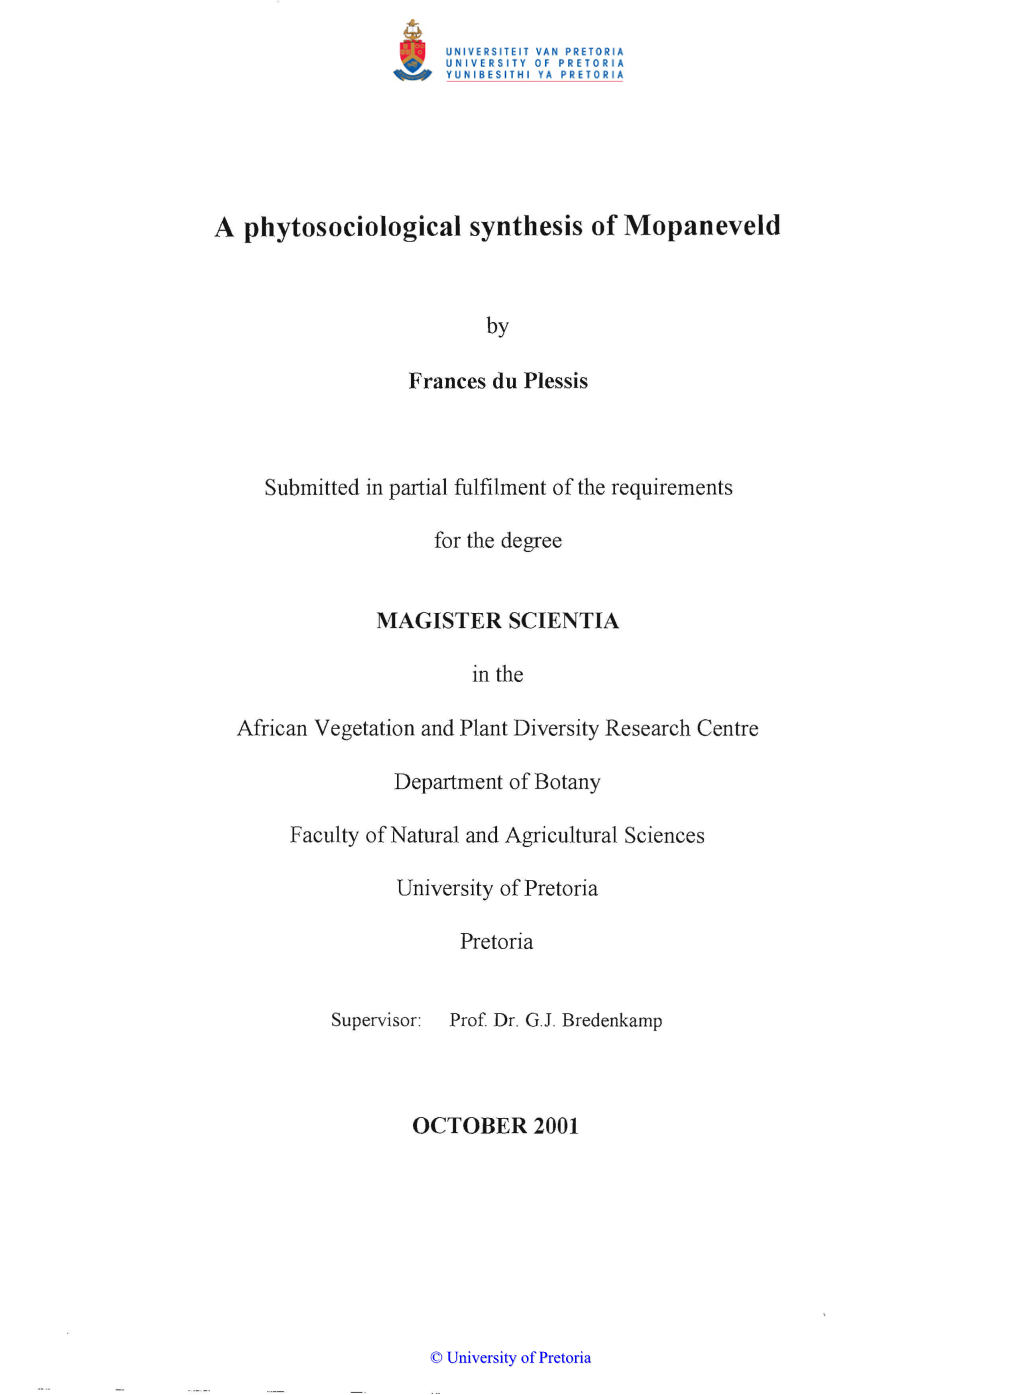 A Phytosociological Synthesis of Mopaneveld